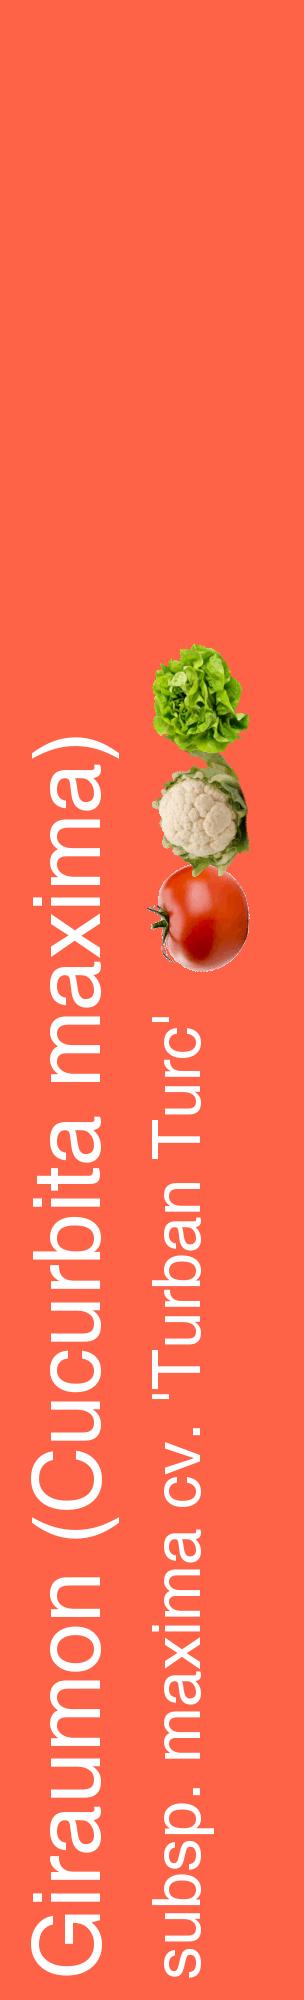 Étiquette de : Cucurbita maxima subsp. maxima cv. 'Turban Turc' - format c - style blanche25_basiquehel avec comestibilité simplifiée